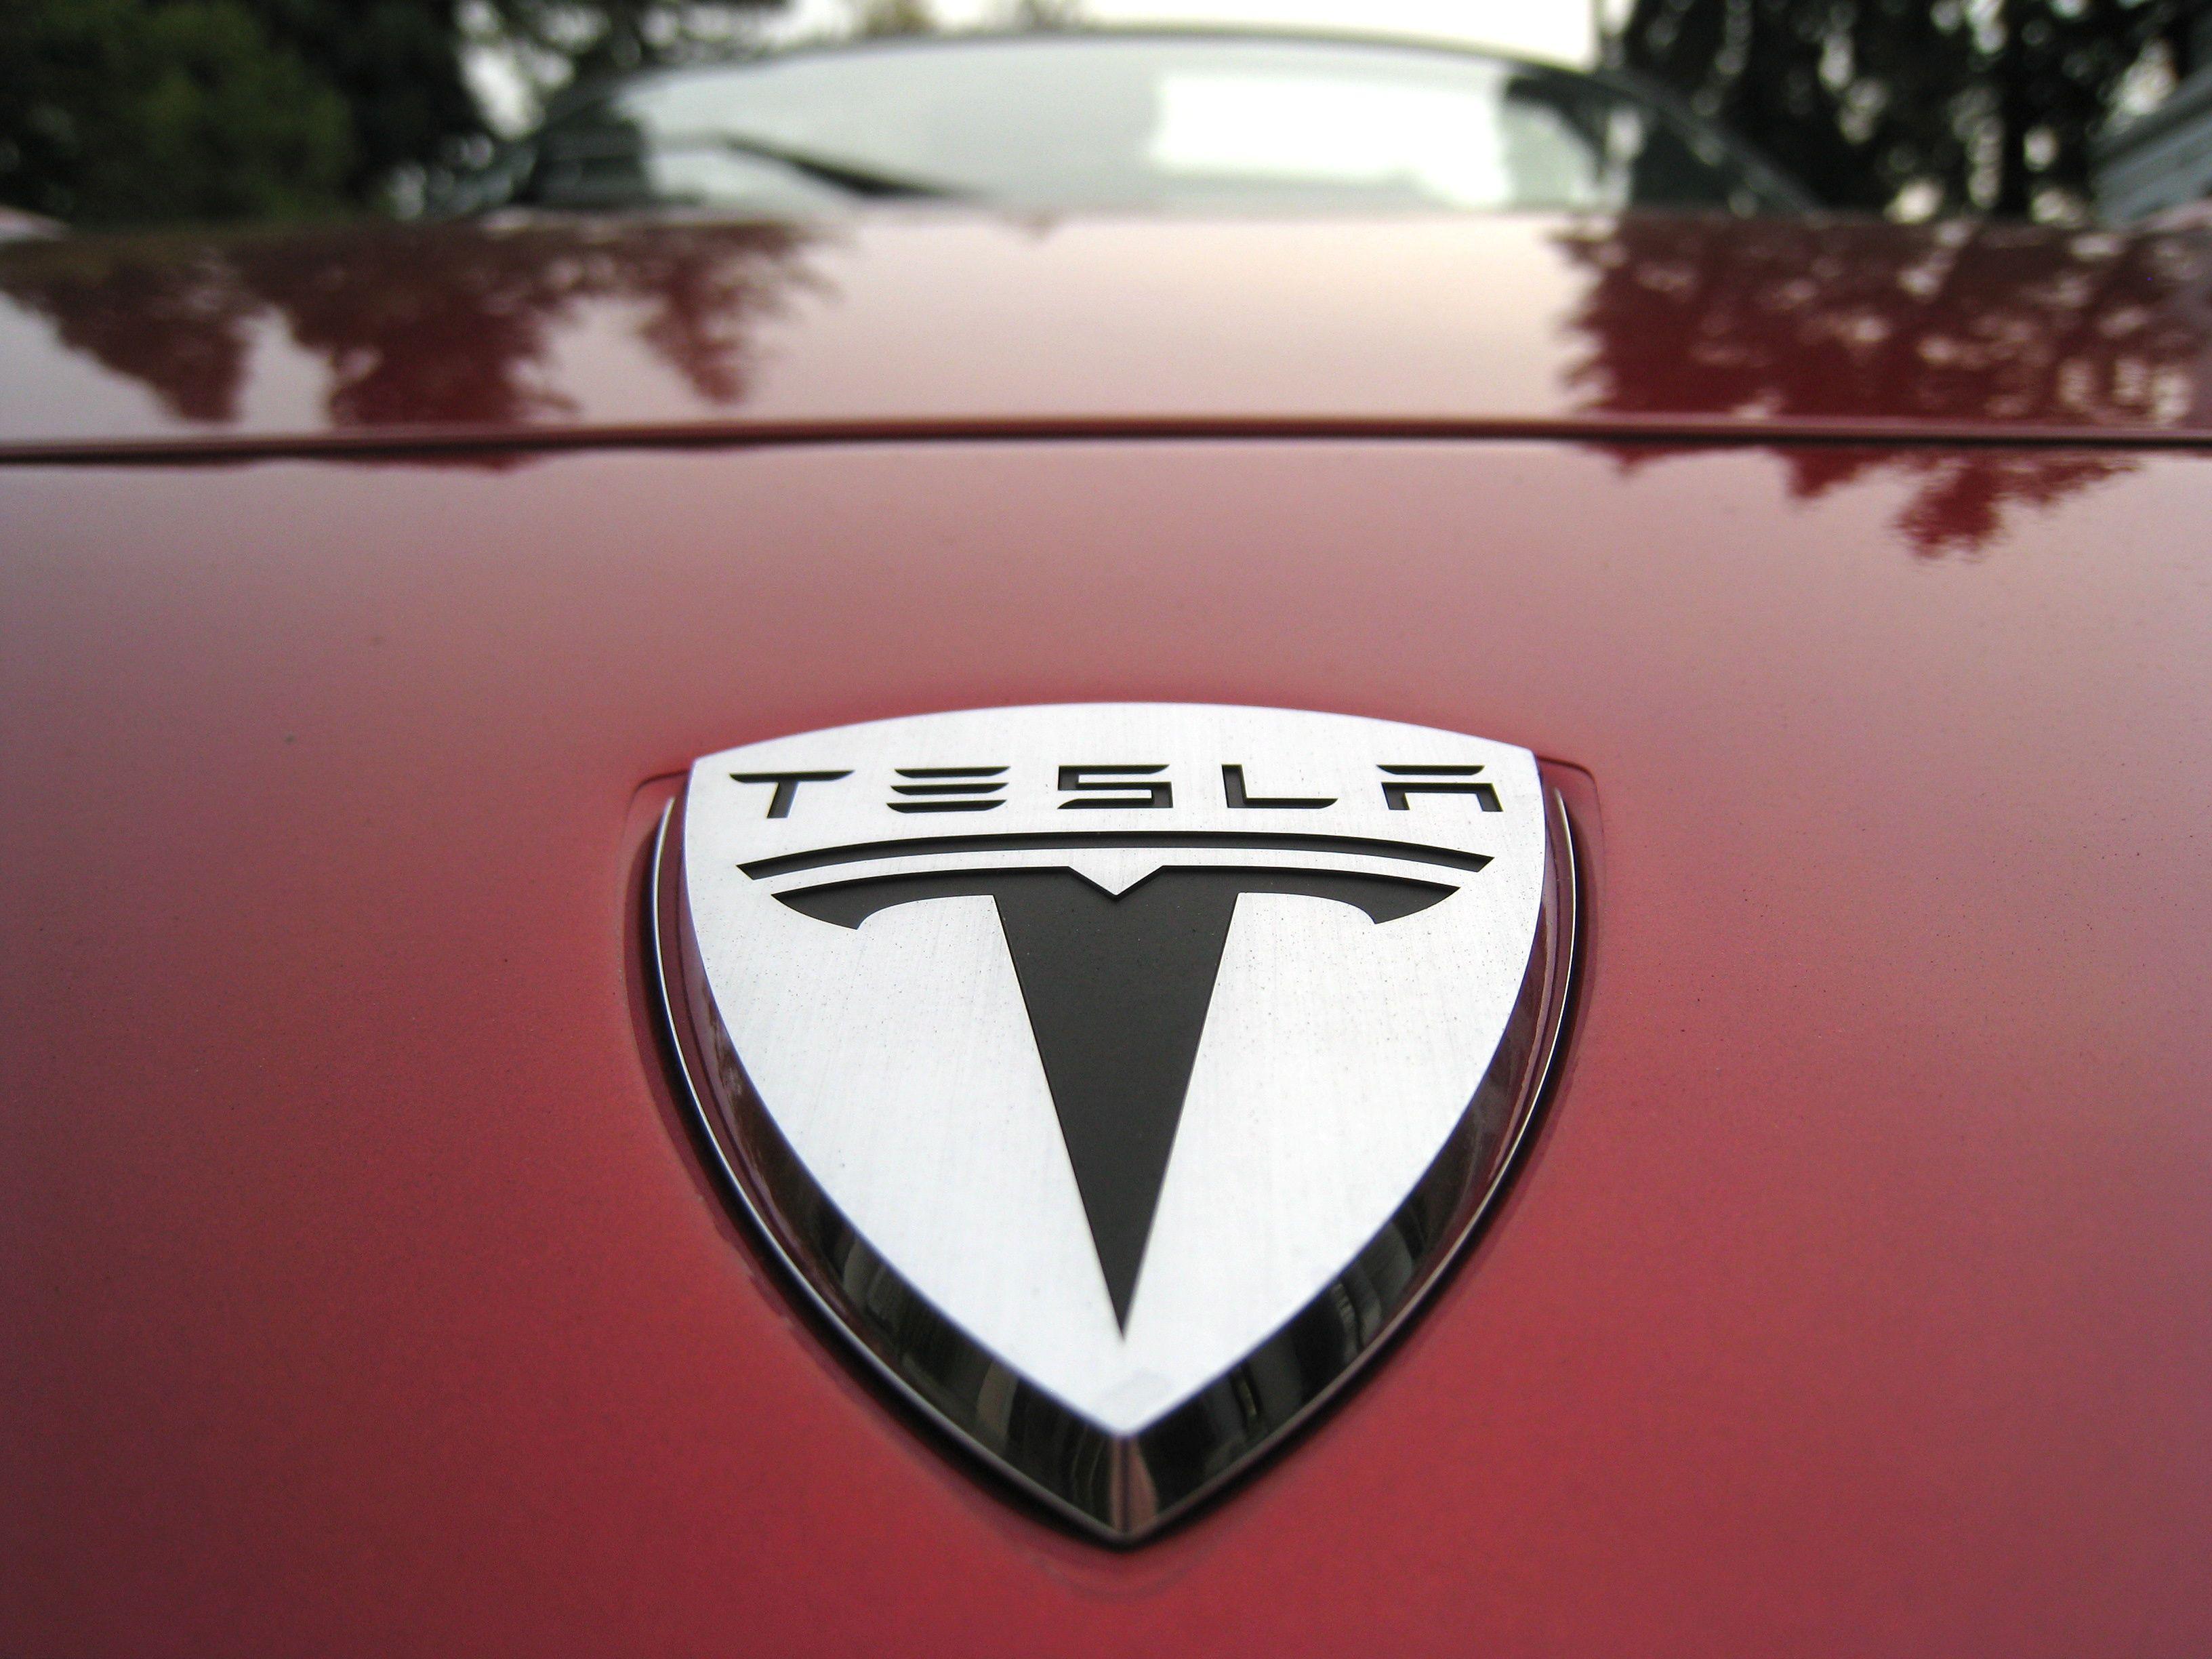 Знак теслы на машине. Тесла значок. Тесла машина logo. Значок автомобиля Tesla. Машина со значком т.